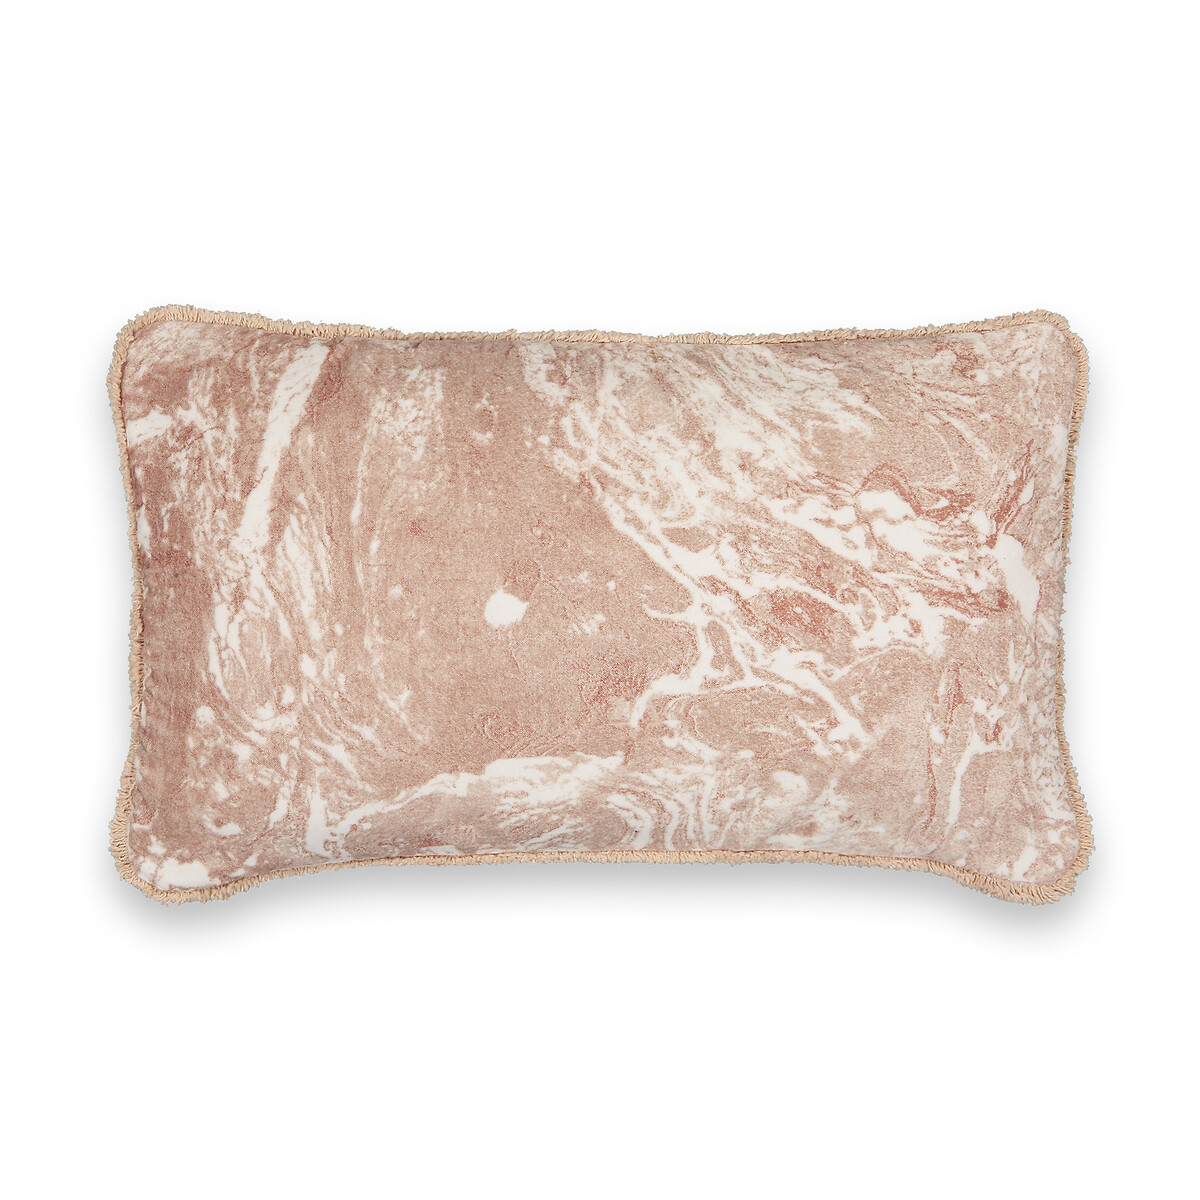 Чехол на подушку из хлопкового велюра Marbly 50 x 30 см розовый чехол на подушку из искусственного меха ouate 50 x 30 см каштановый